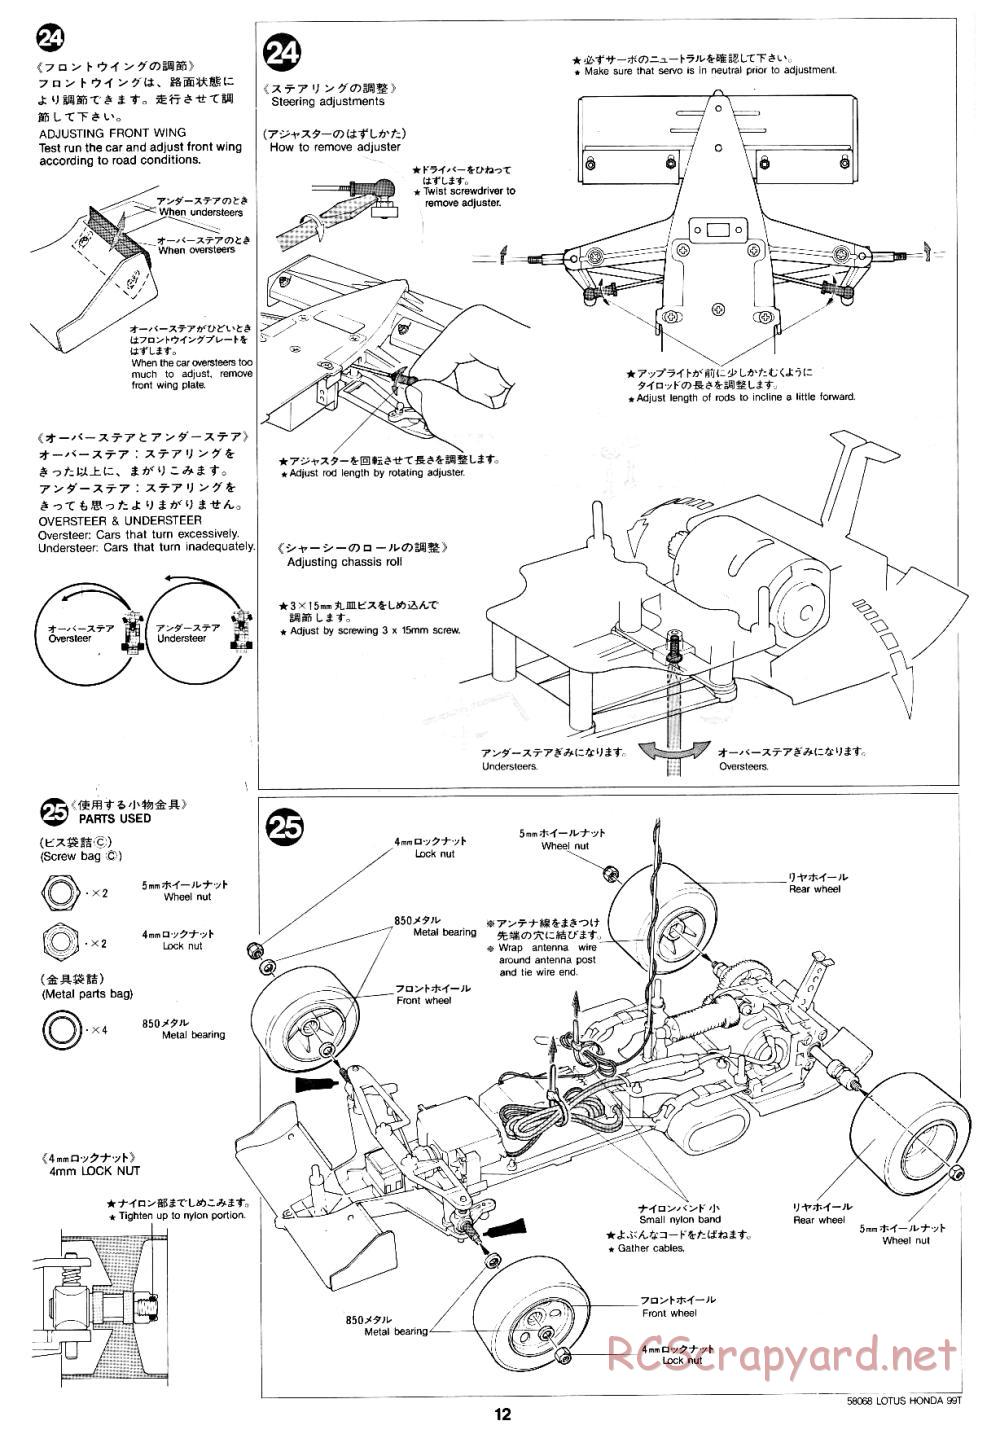 Tamiya - Lotus Honda 99T - 58068 - Manual - Page 12